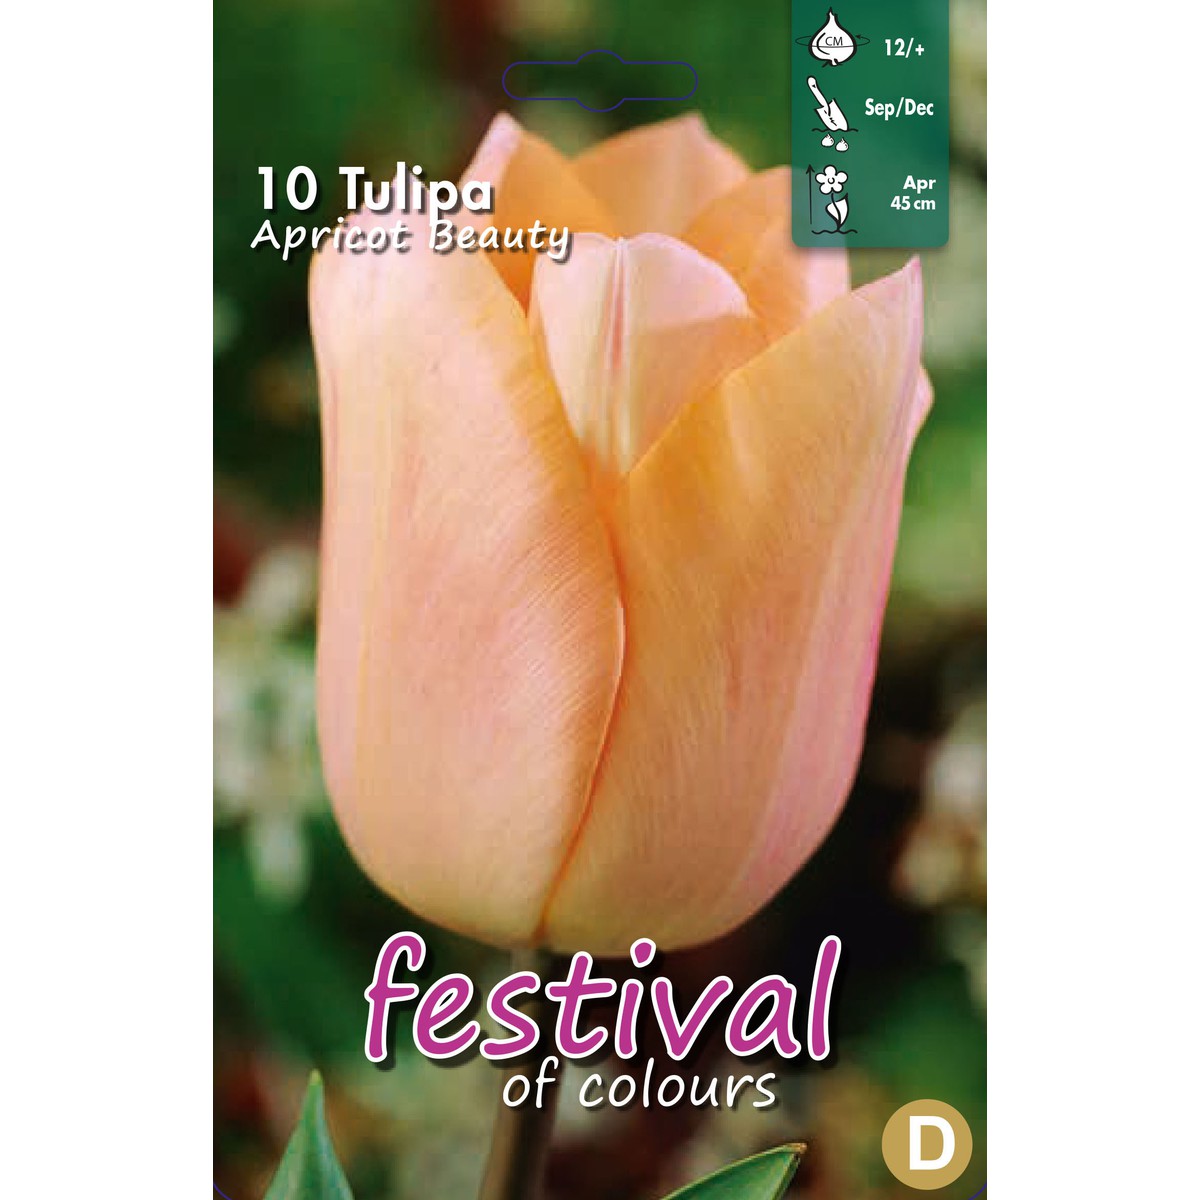   Tulipes 'Abricot Beauty'  10 pcs 12/